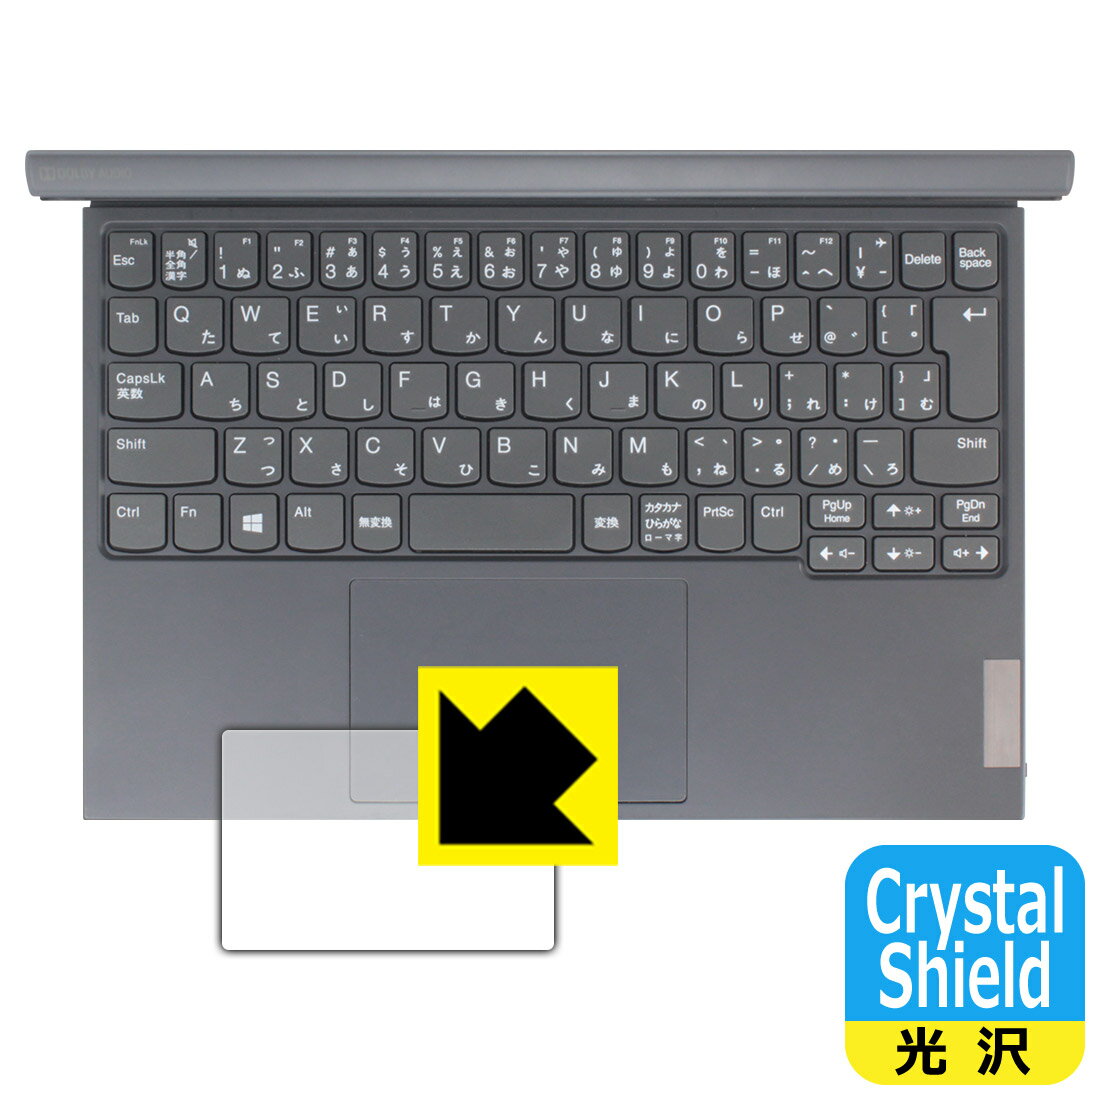 PDAH[ Lenovo IdeaPad Duet 350i Ή Crystal Shield ی tB [^b`pbhp] 3  { А